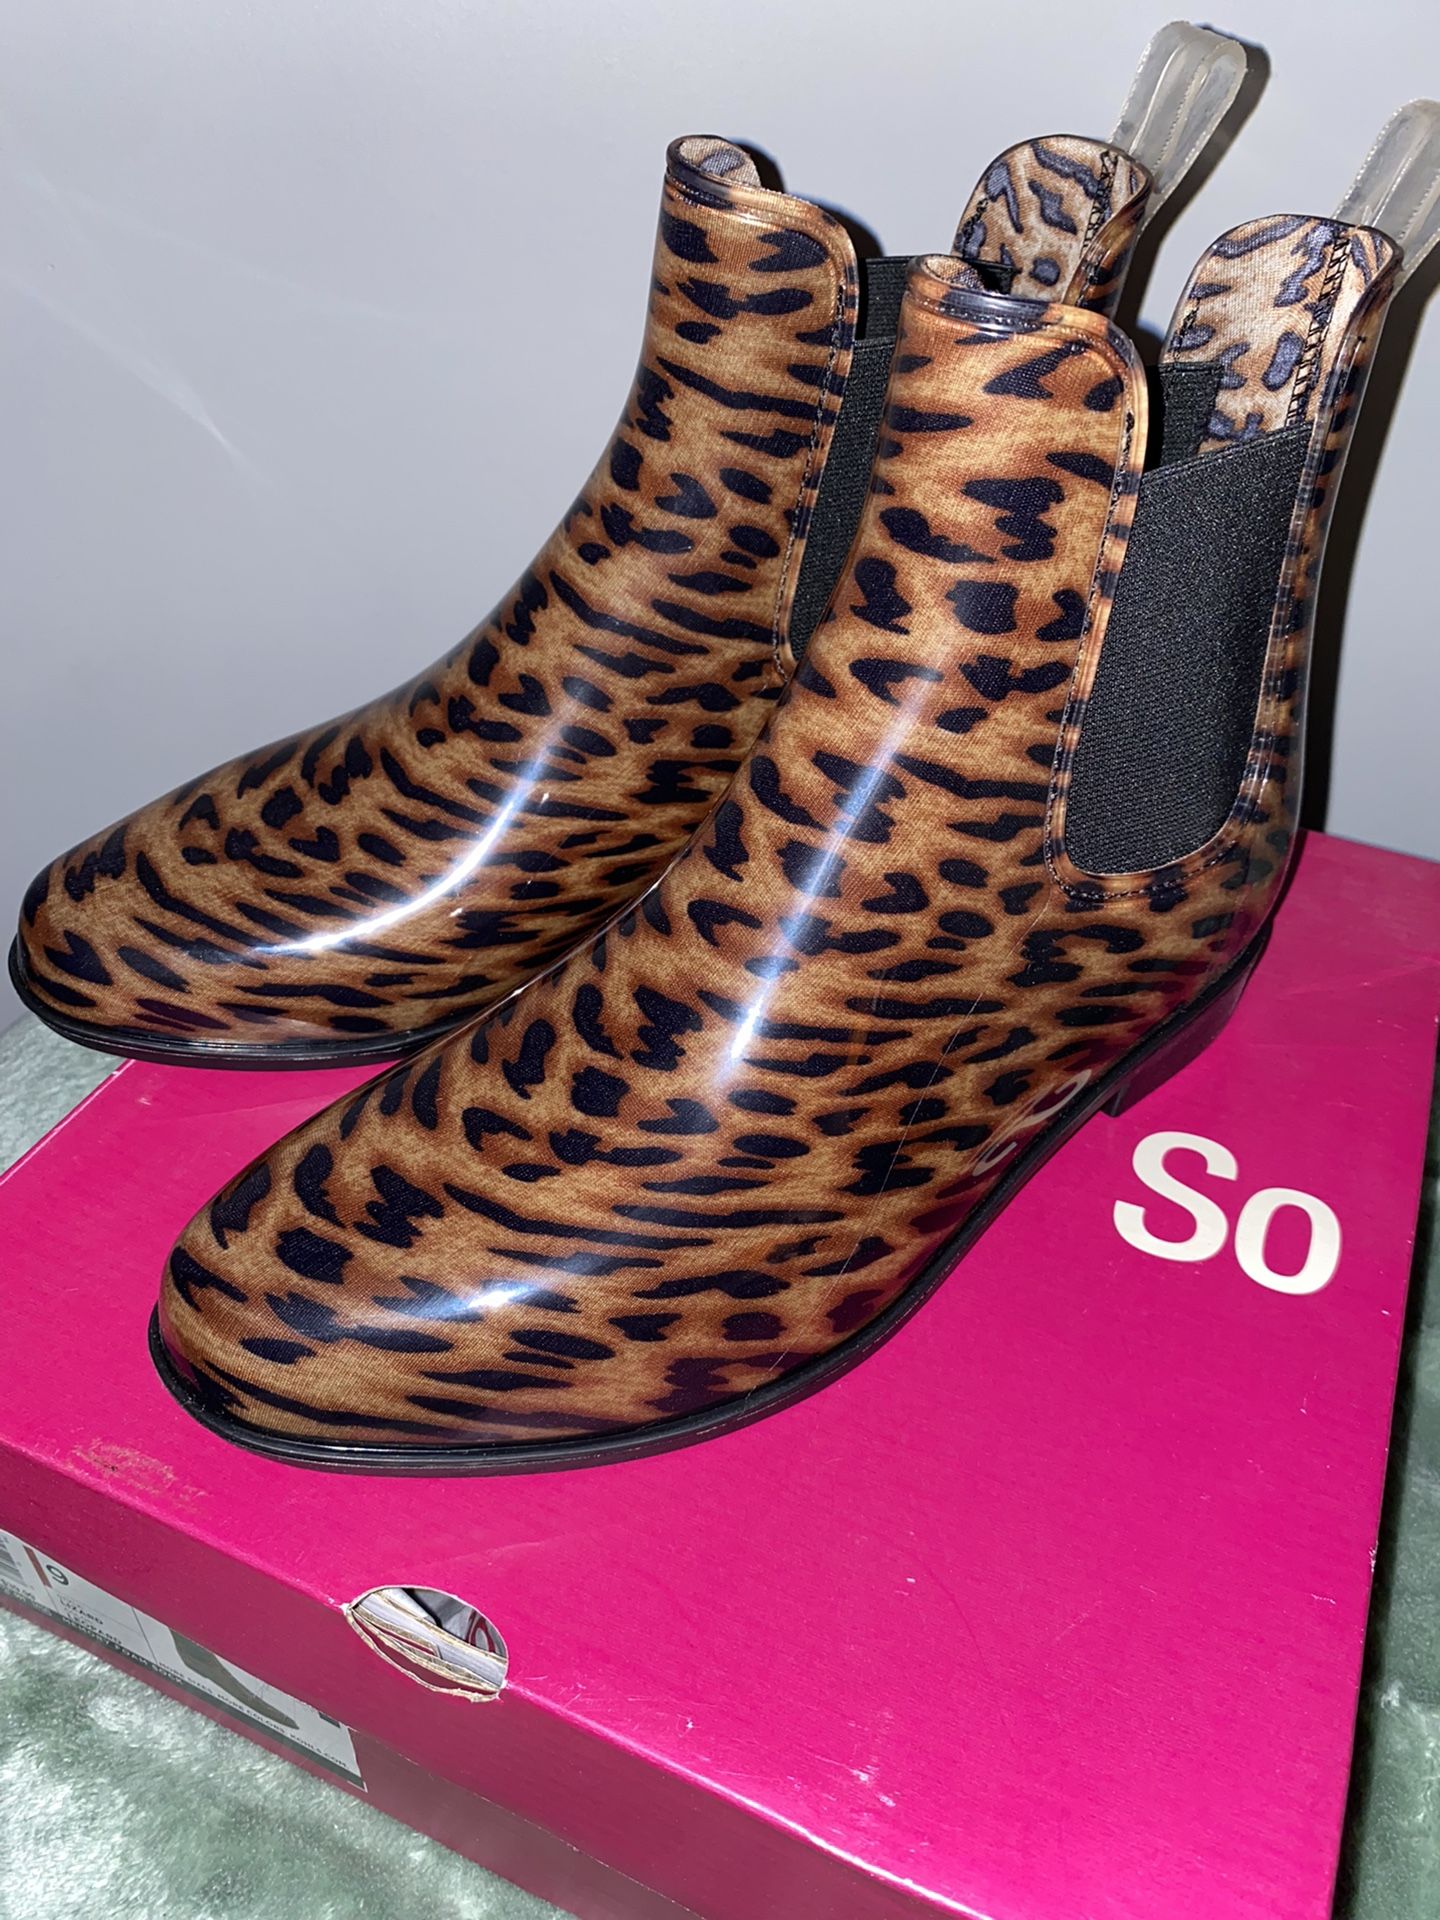 New Size 9 Womens Rain Boots